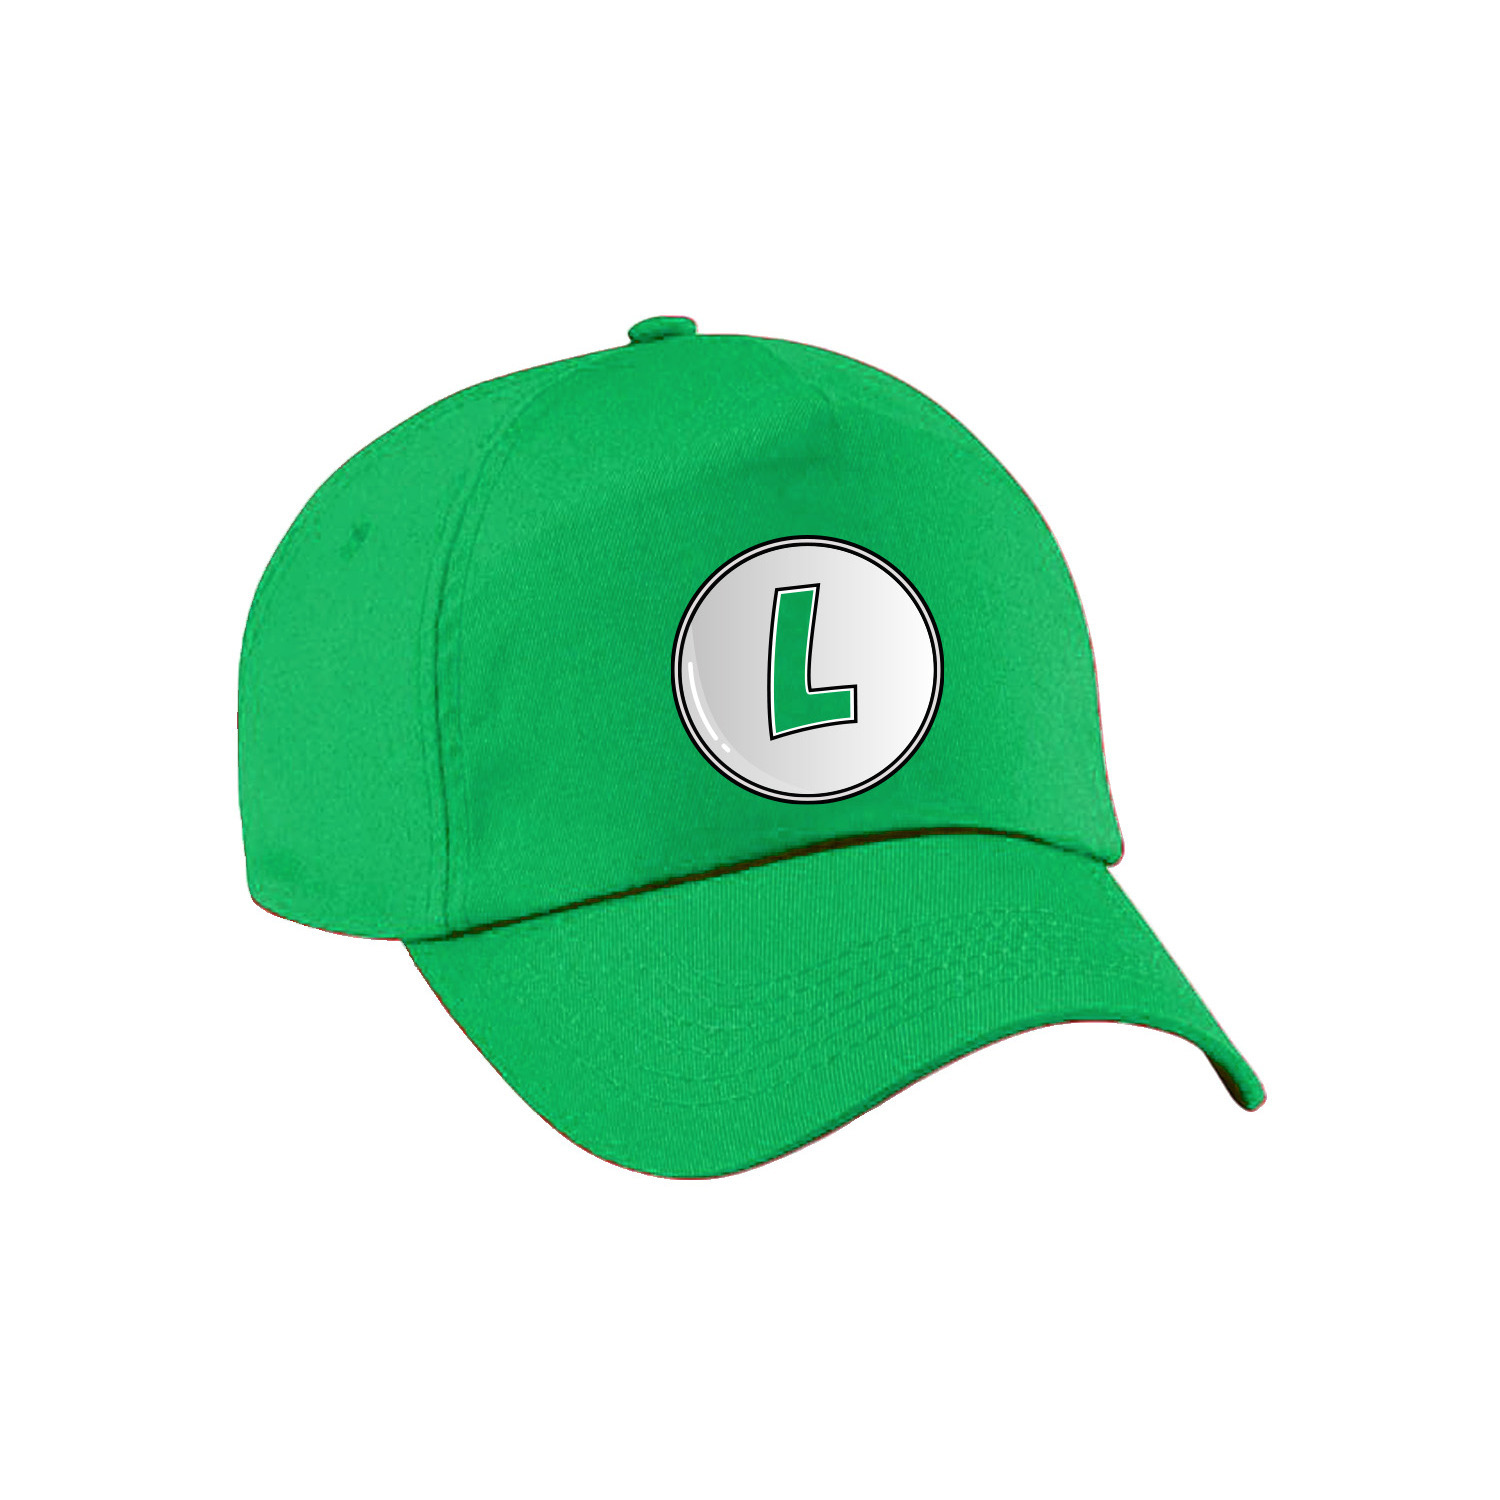 Game verkleed pet loodgieter Luigi groen volwassenen unisex carnaval-themafeest outfit